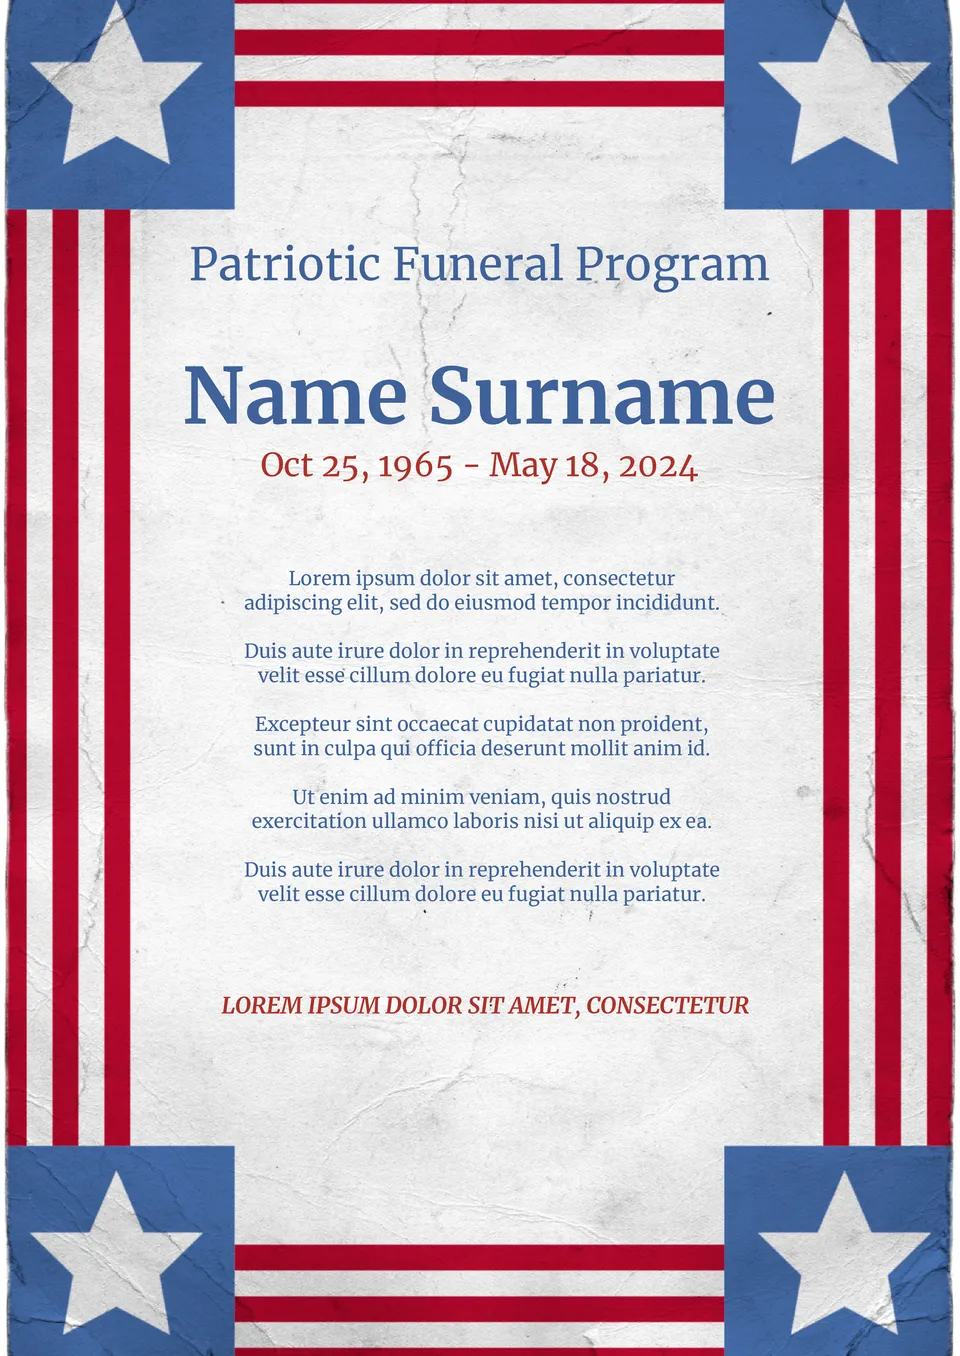 Patriotic Funeral Program Template